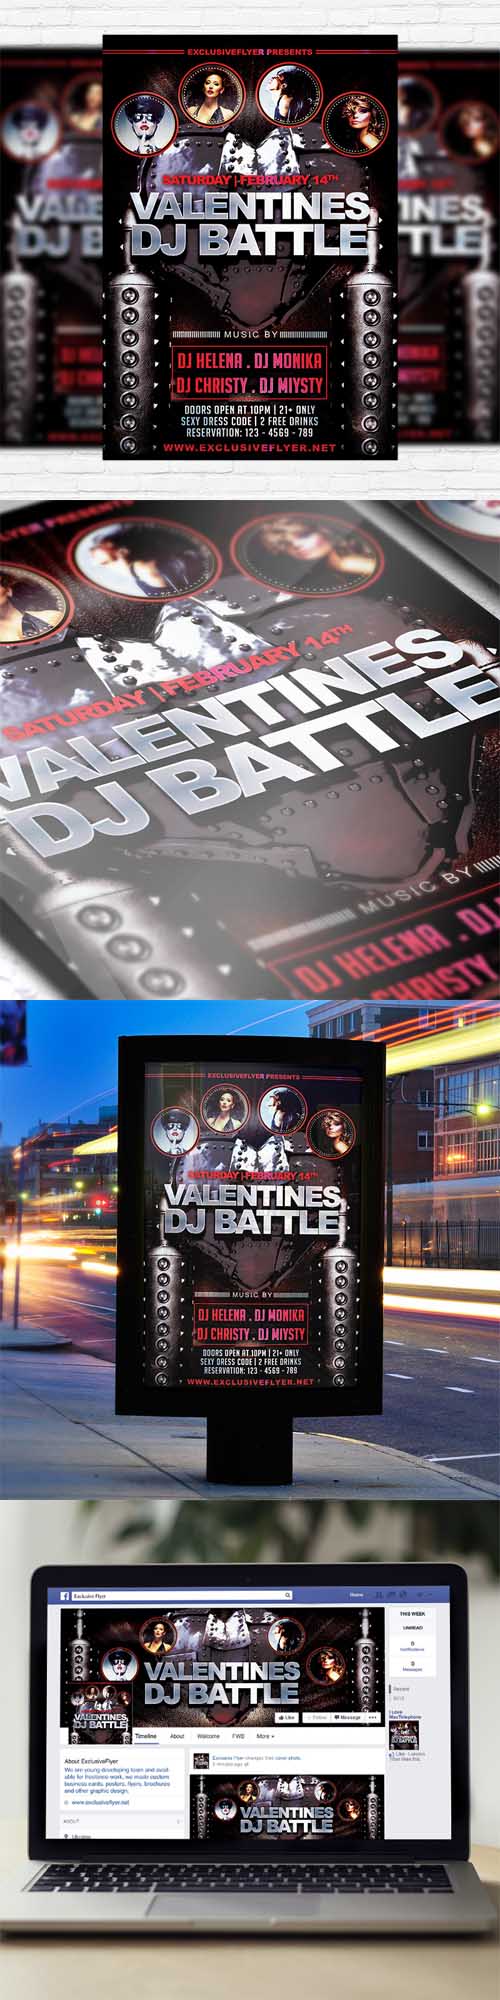 Flyer Template - Valentines DJ Battle + Facebook Cover